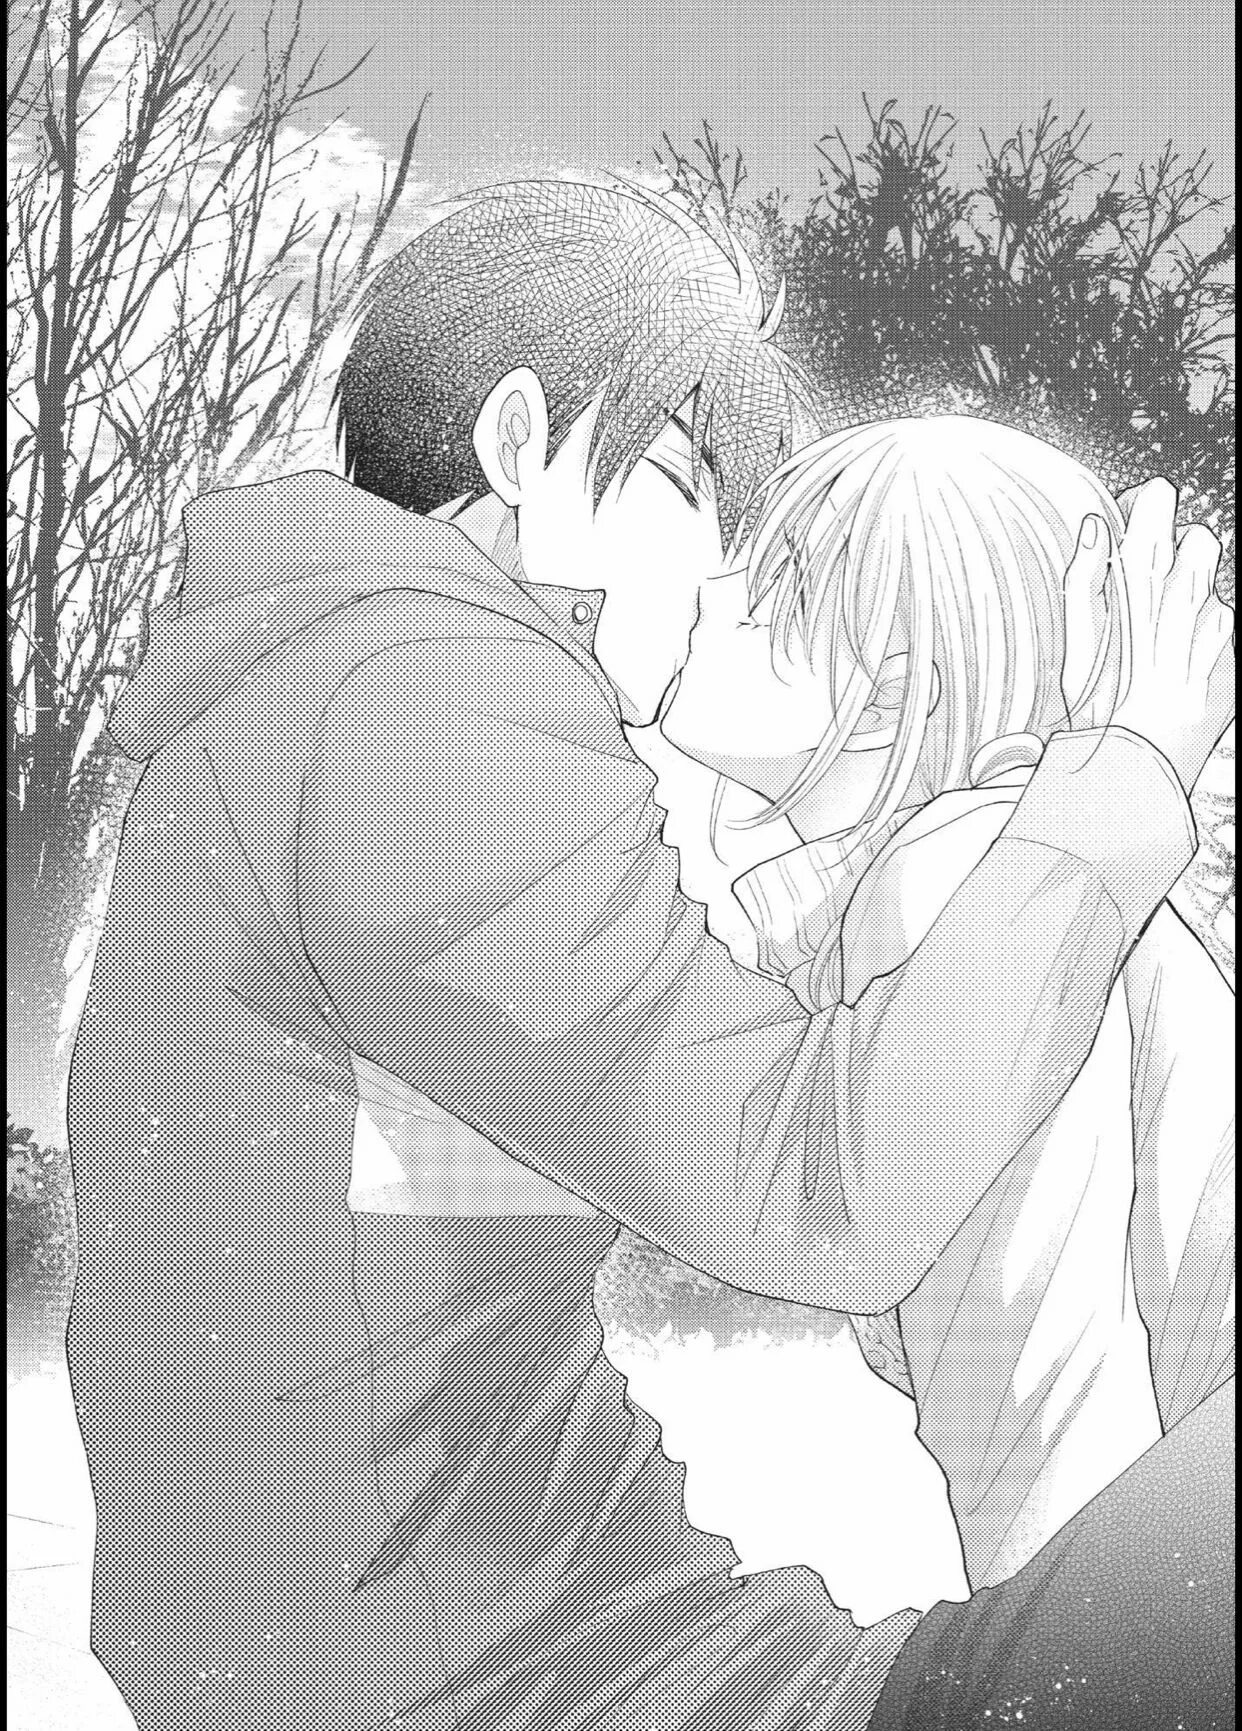 Манга поцелуй. Поцелуи в манге картинки. Shoujo Romance Манга. Мой парень призрак поцелуи Манга. My cute romance